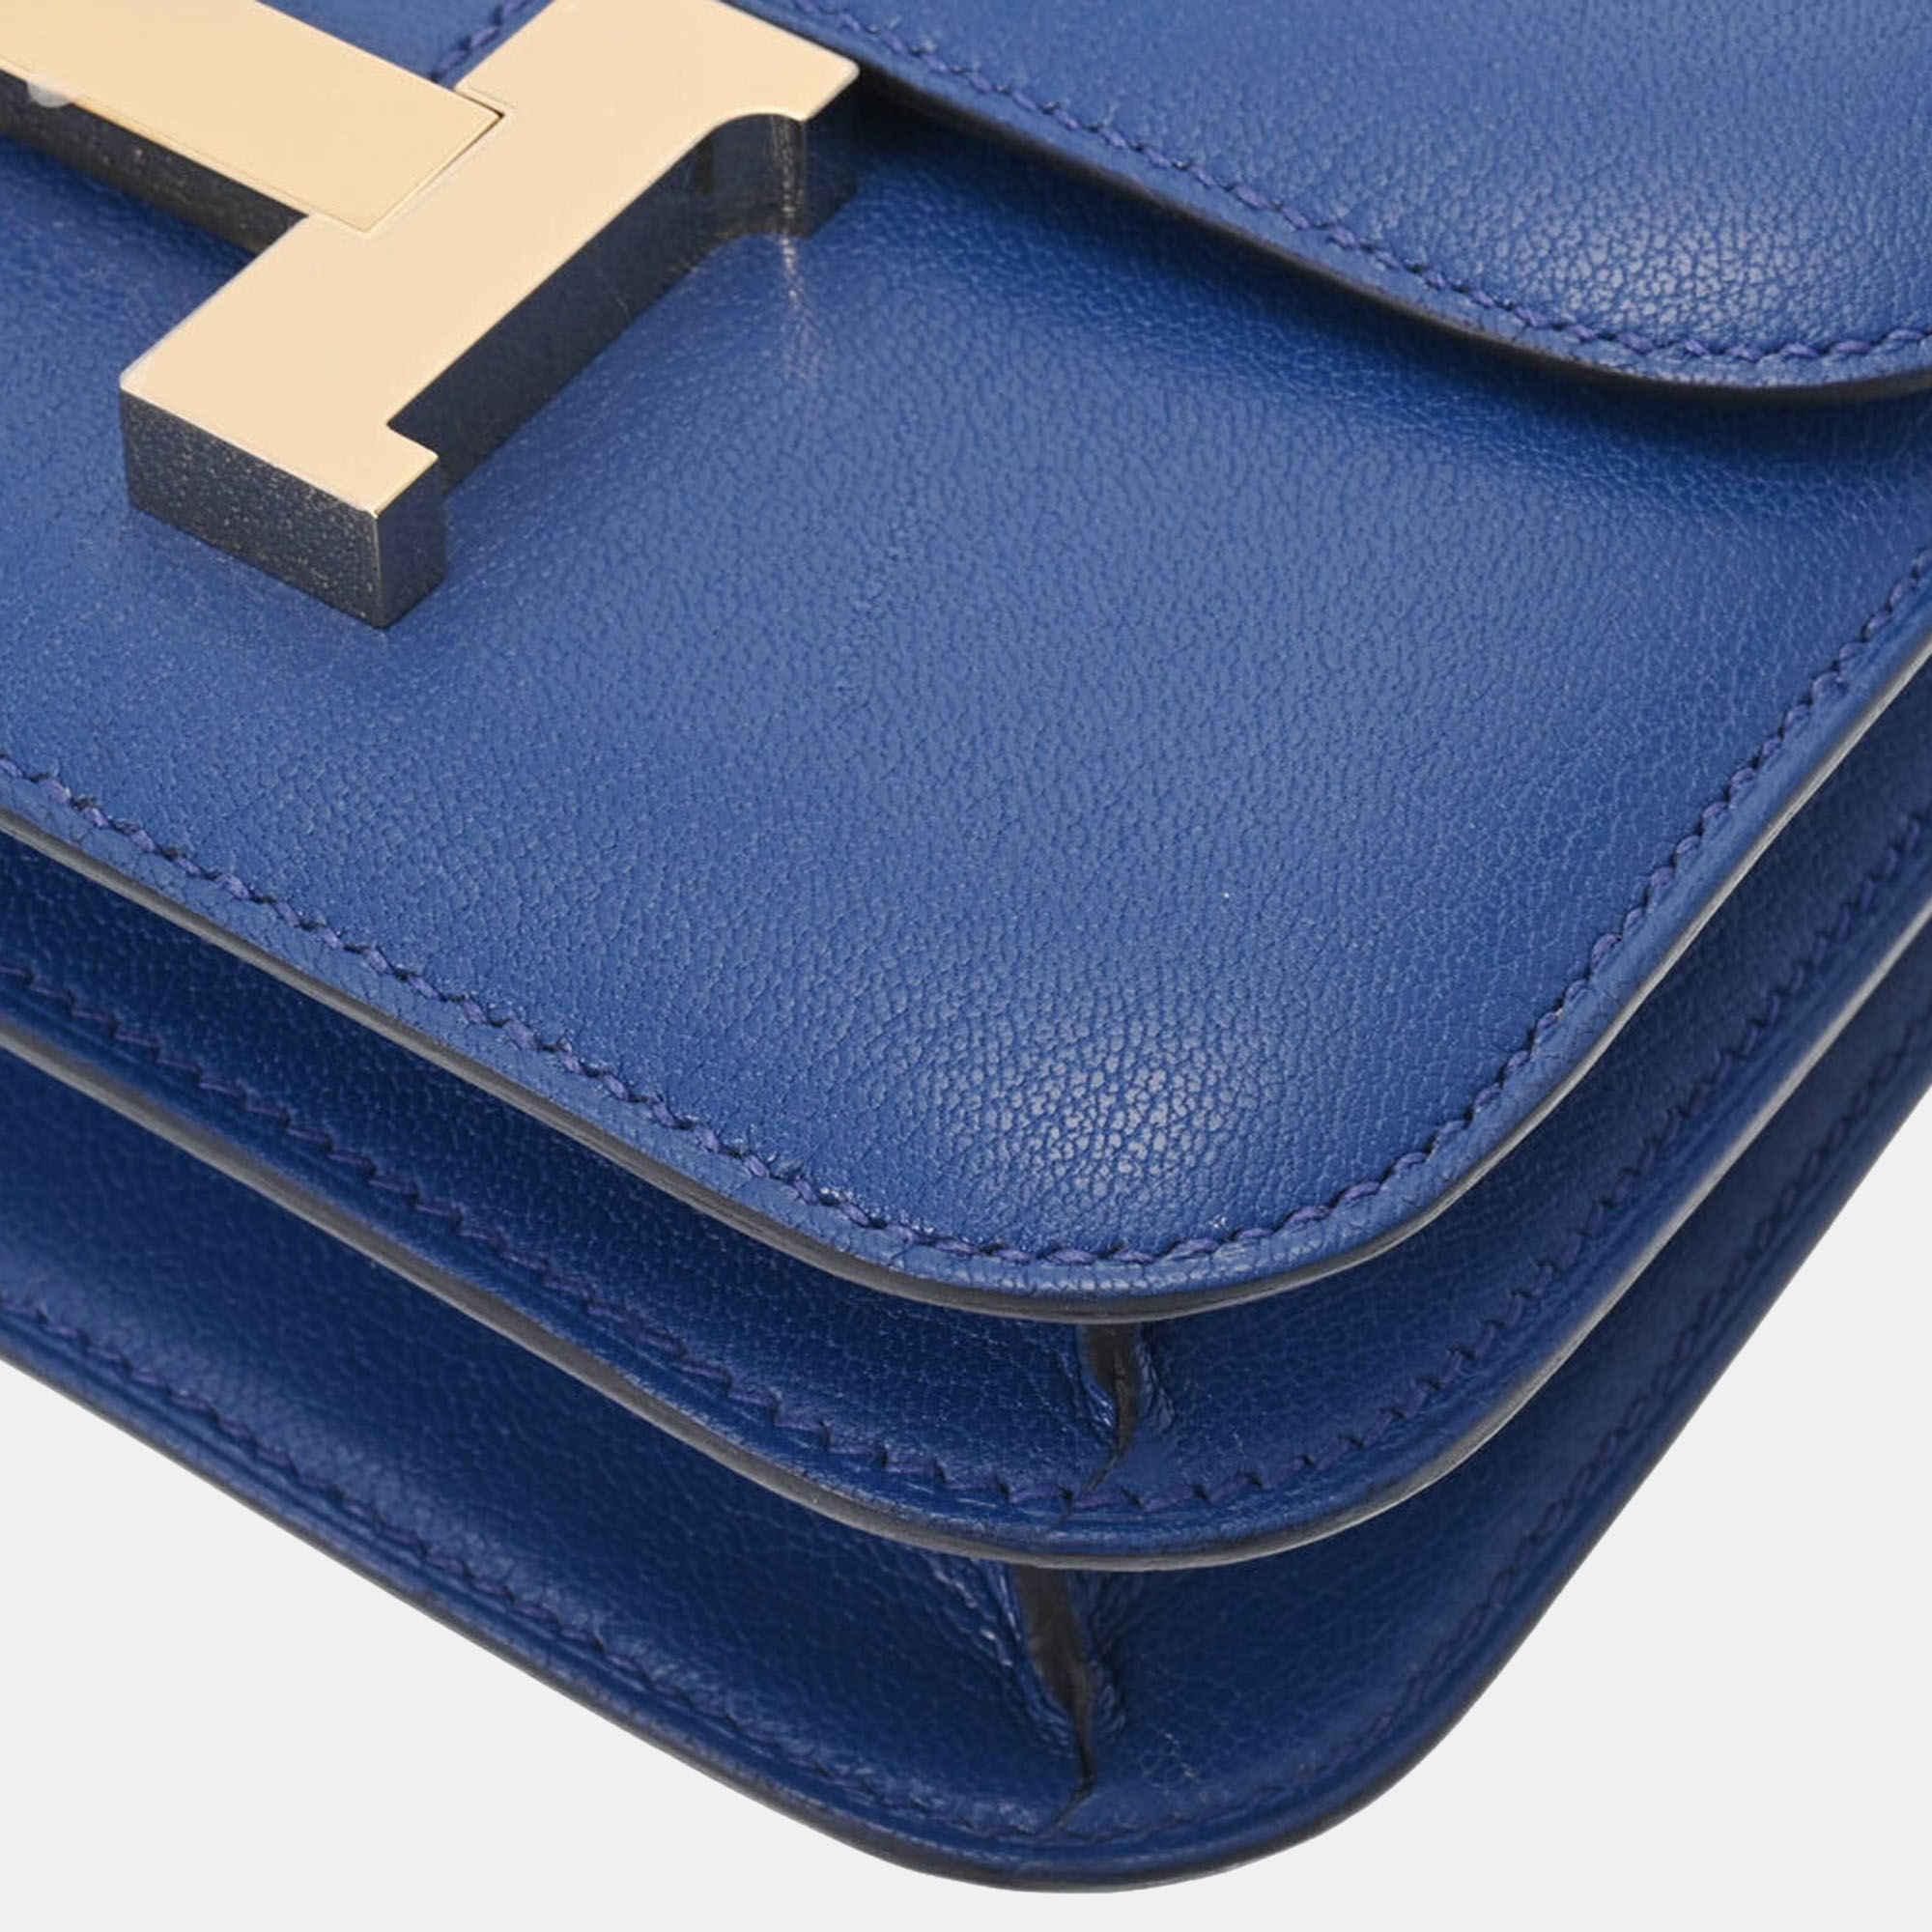 Hermes Blue Leather Chevre Constance Mini 18 Shoulder Bag